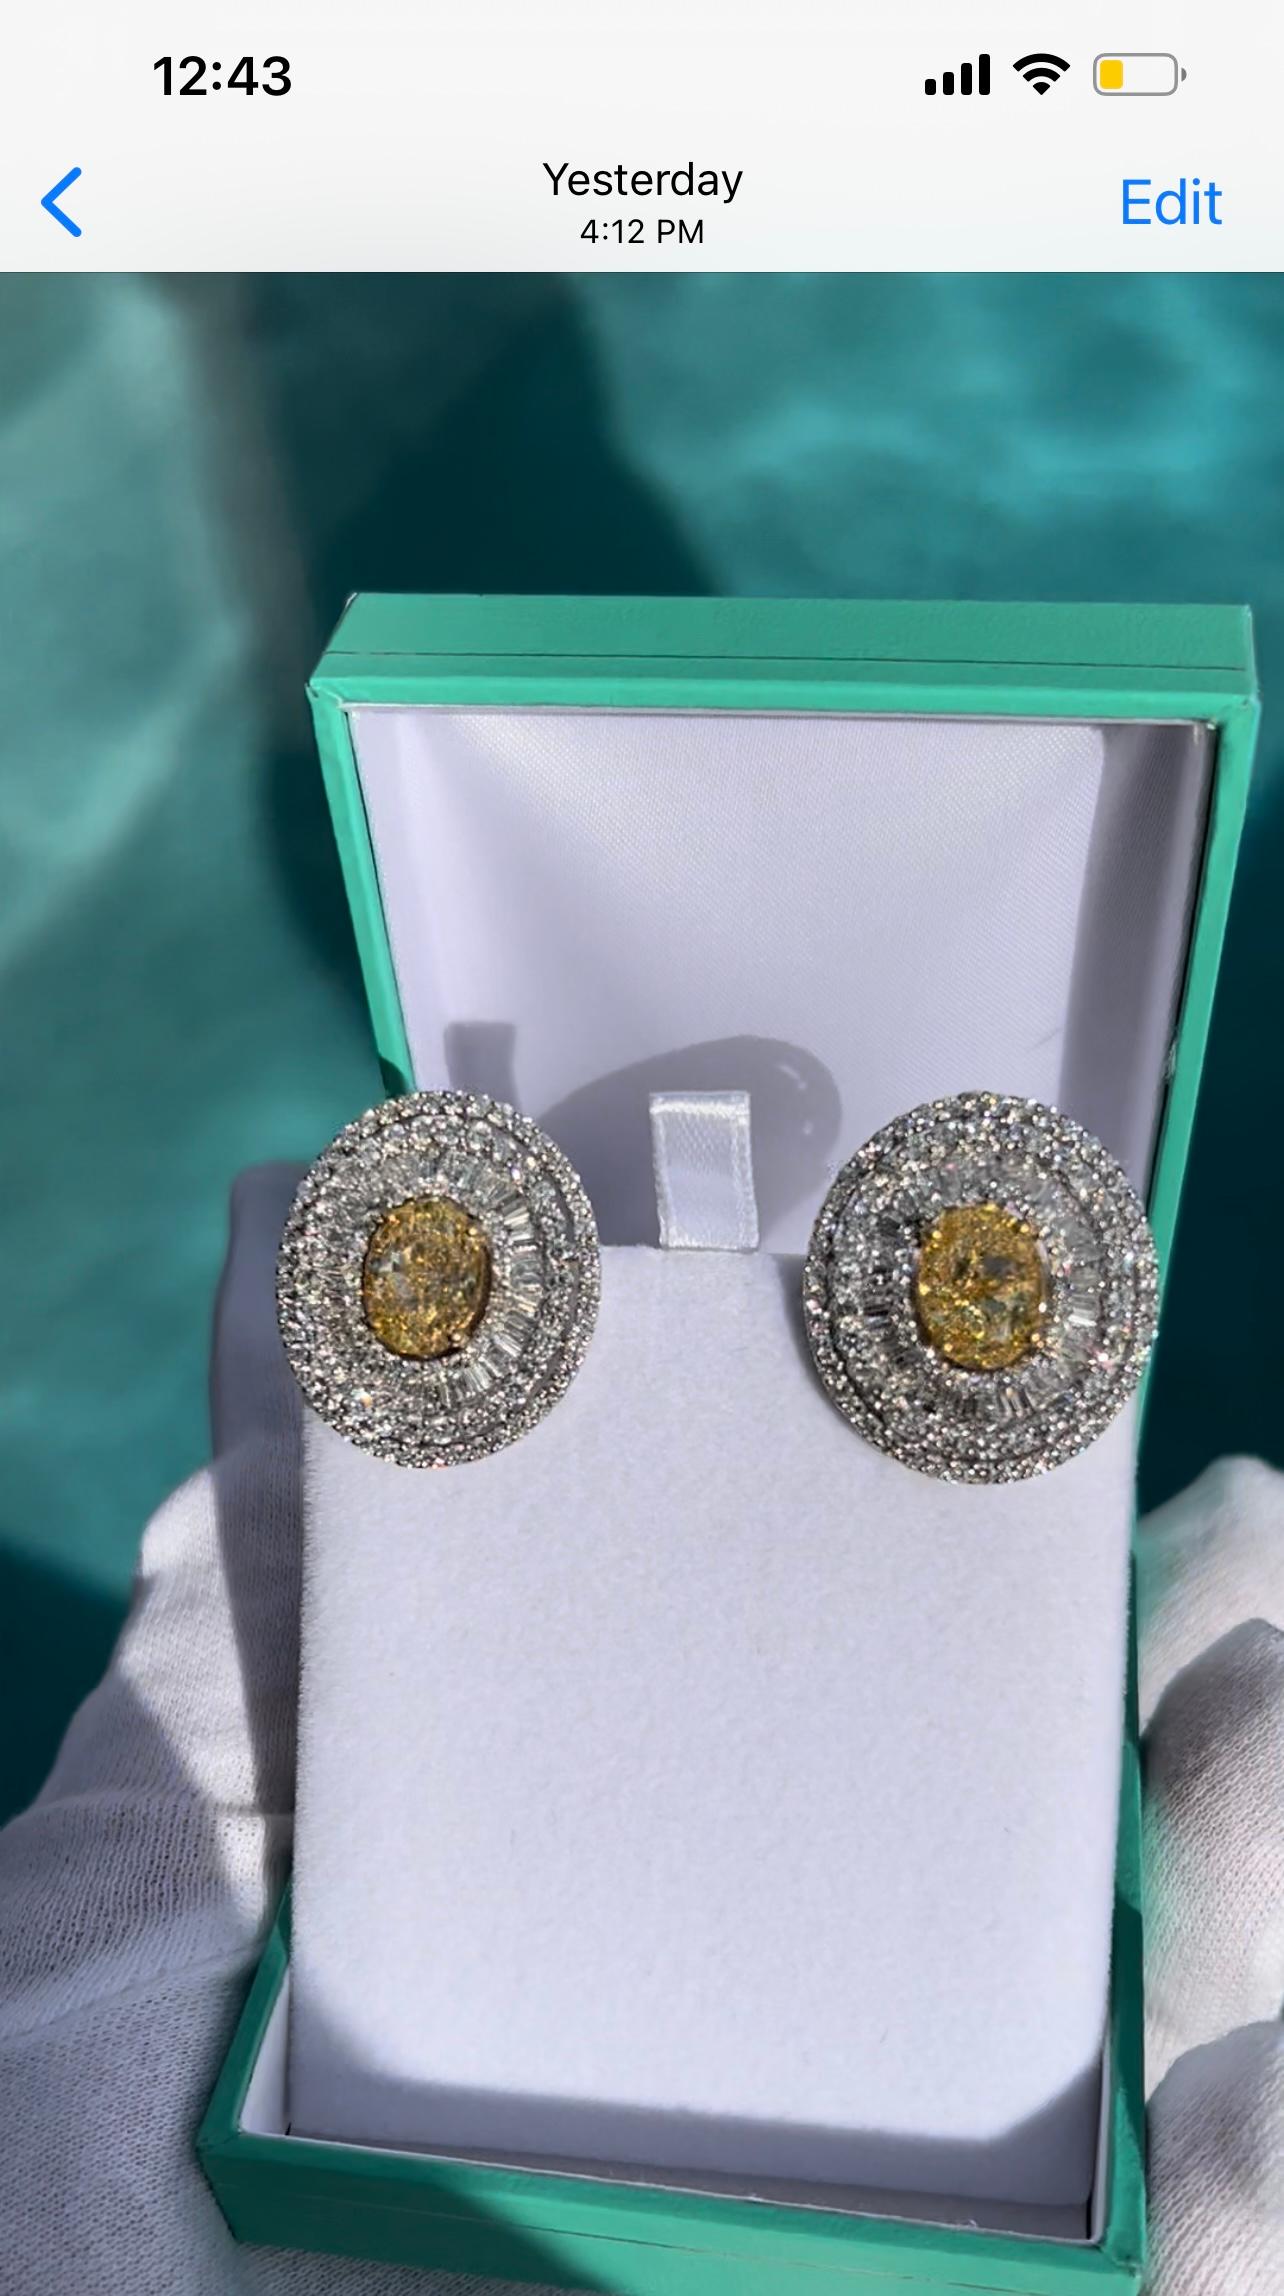 Artisan Phenomenal Pair of 17.39 Carat Fancy Yellow and White Diamond Earrings 18K Gold